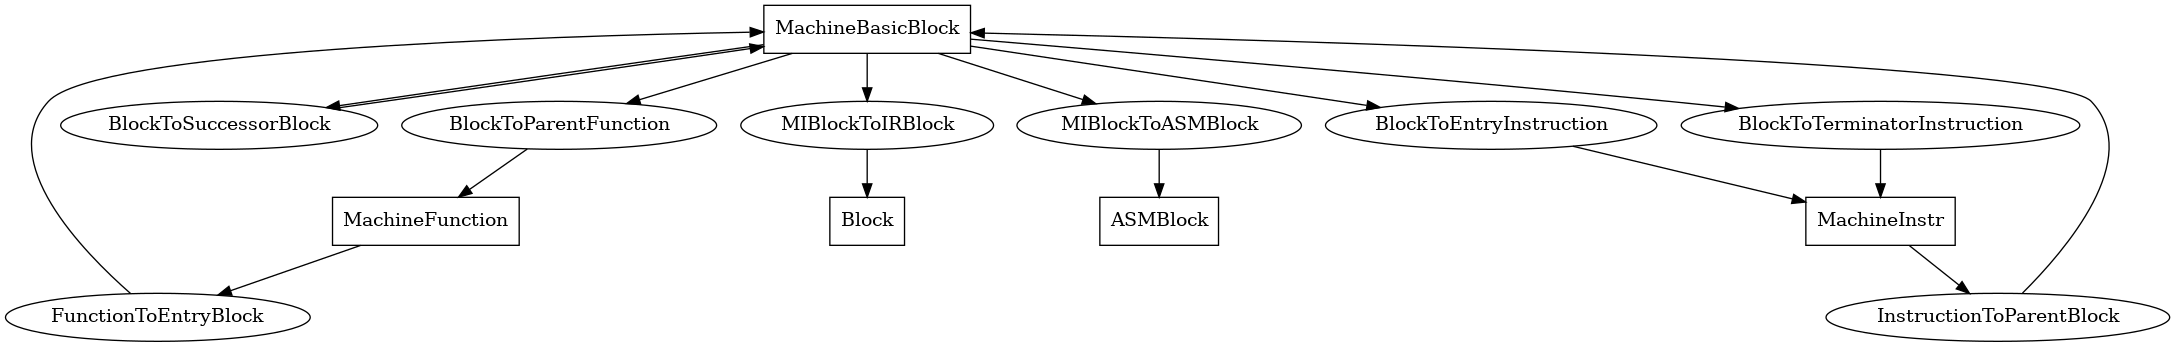 Entity-relationship diagram for MachineBasicBlock nodes